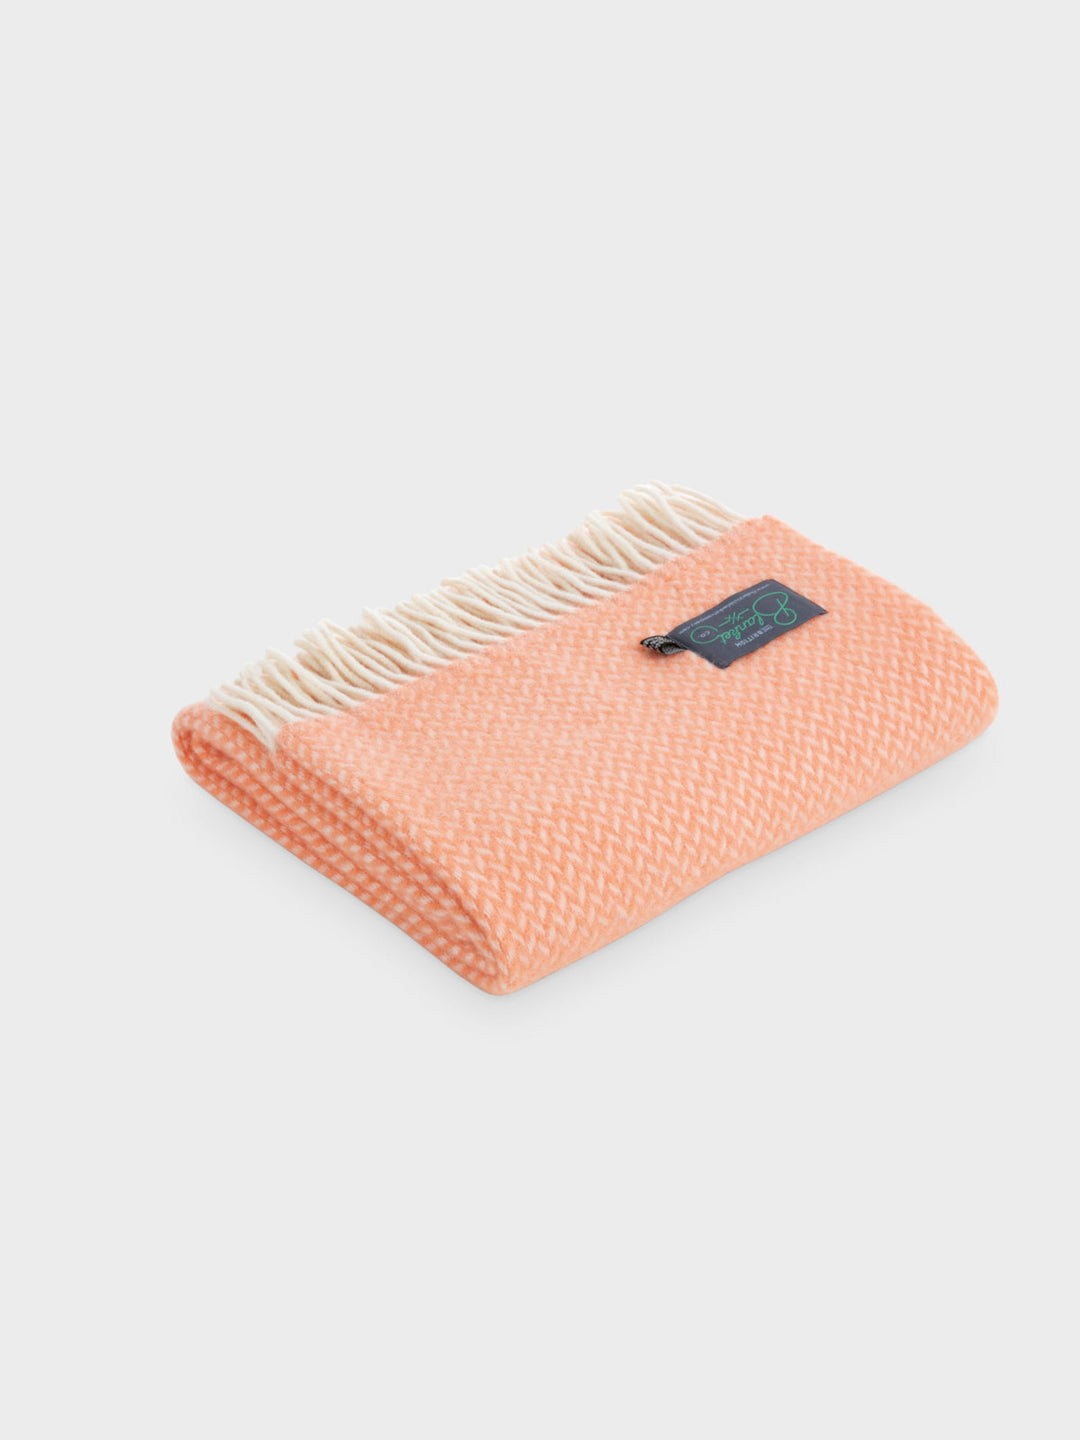 Folded bright orange herringbone wool throw by The British Blanket Company.